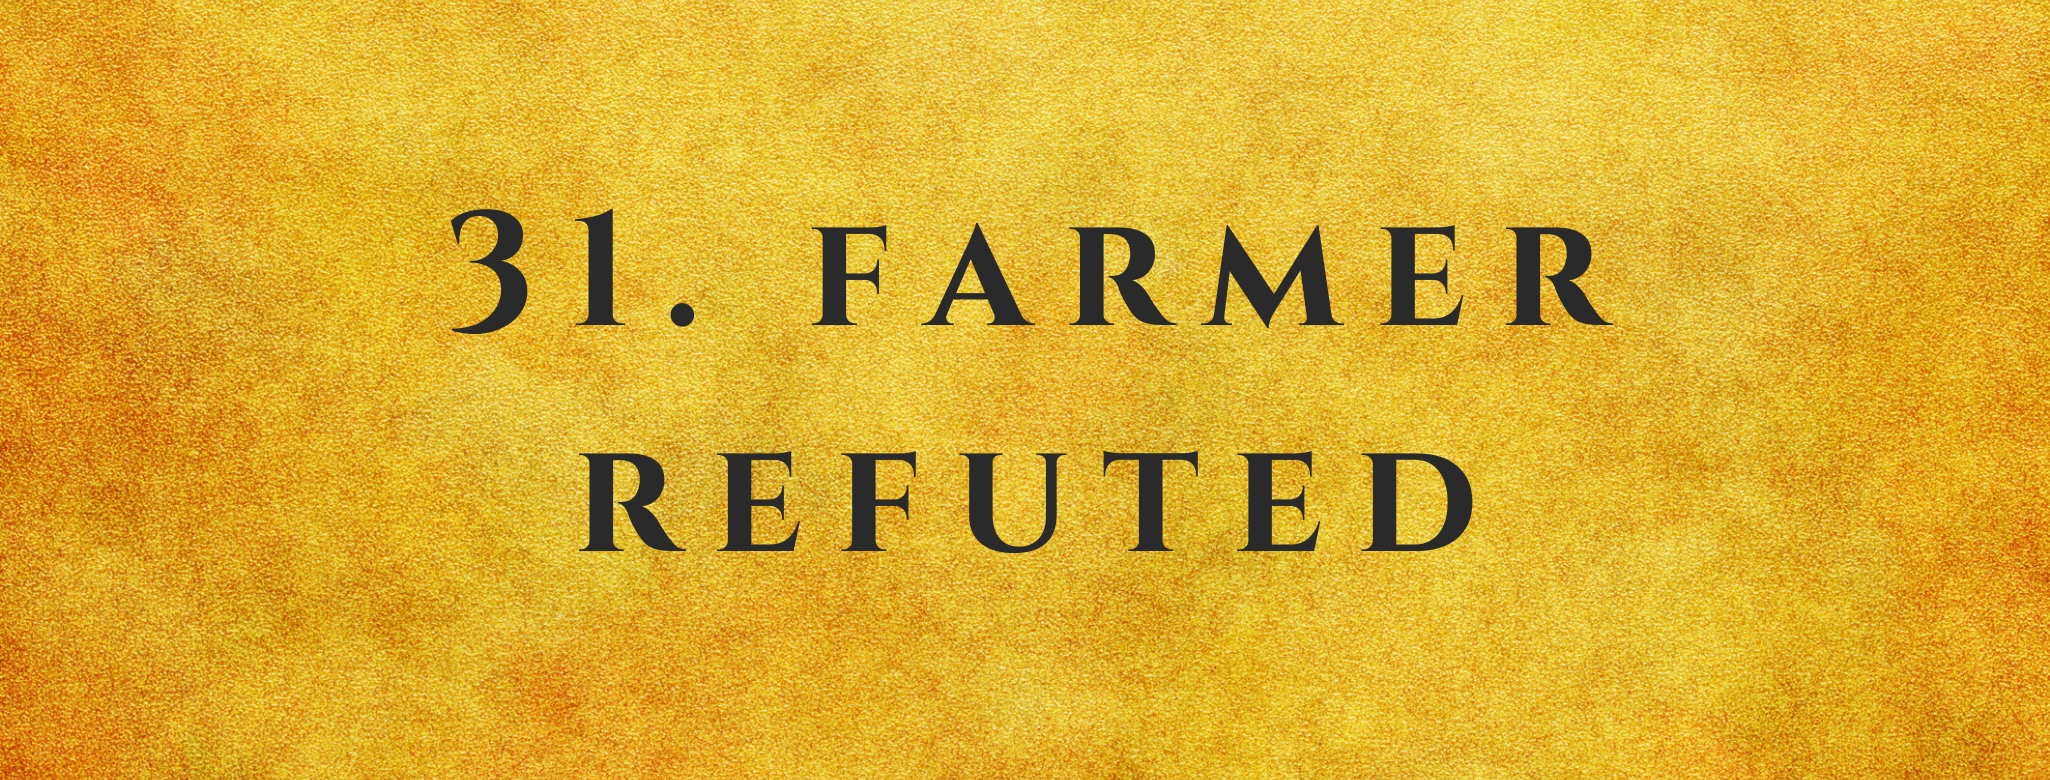 #31 Farmer Refuted